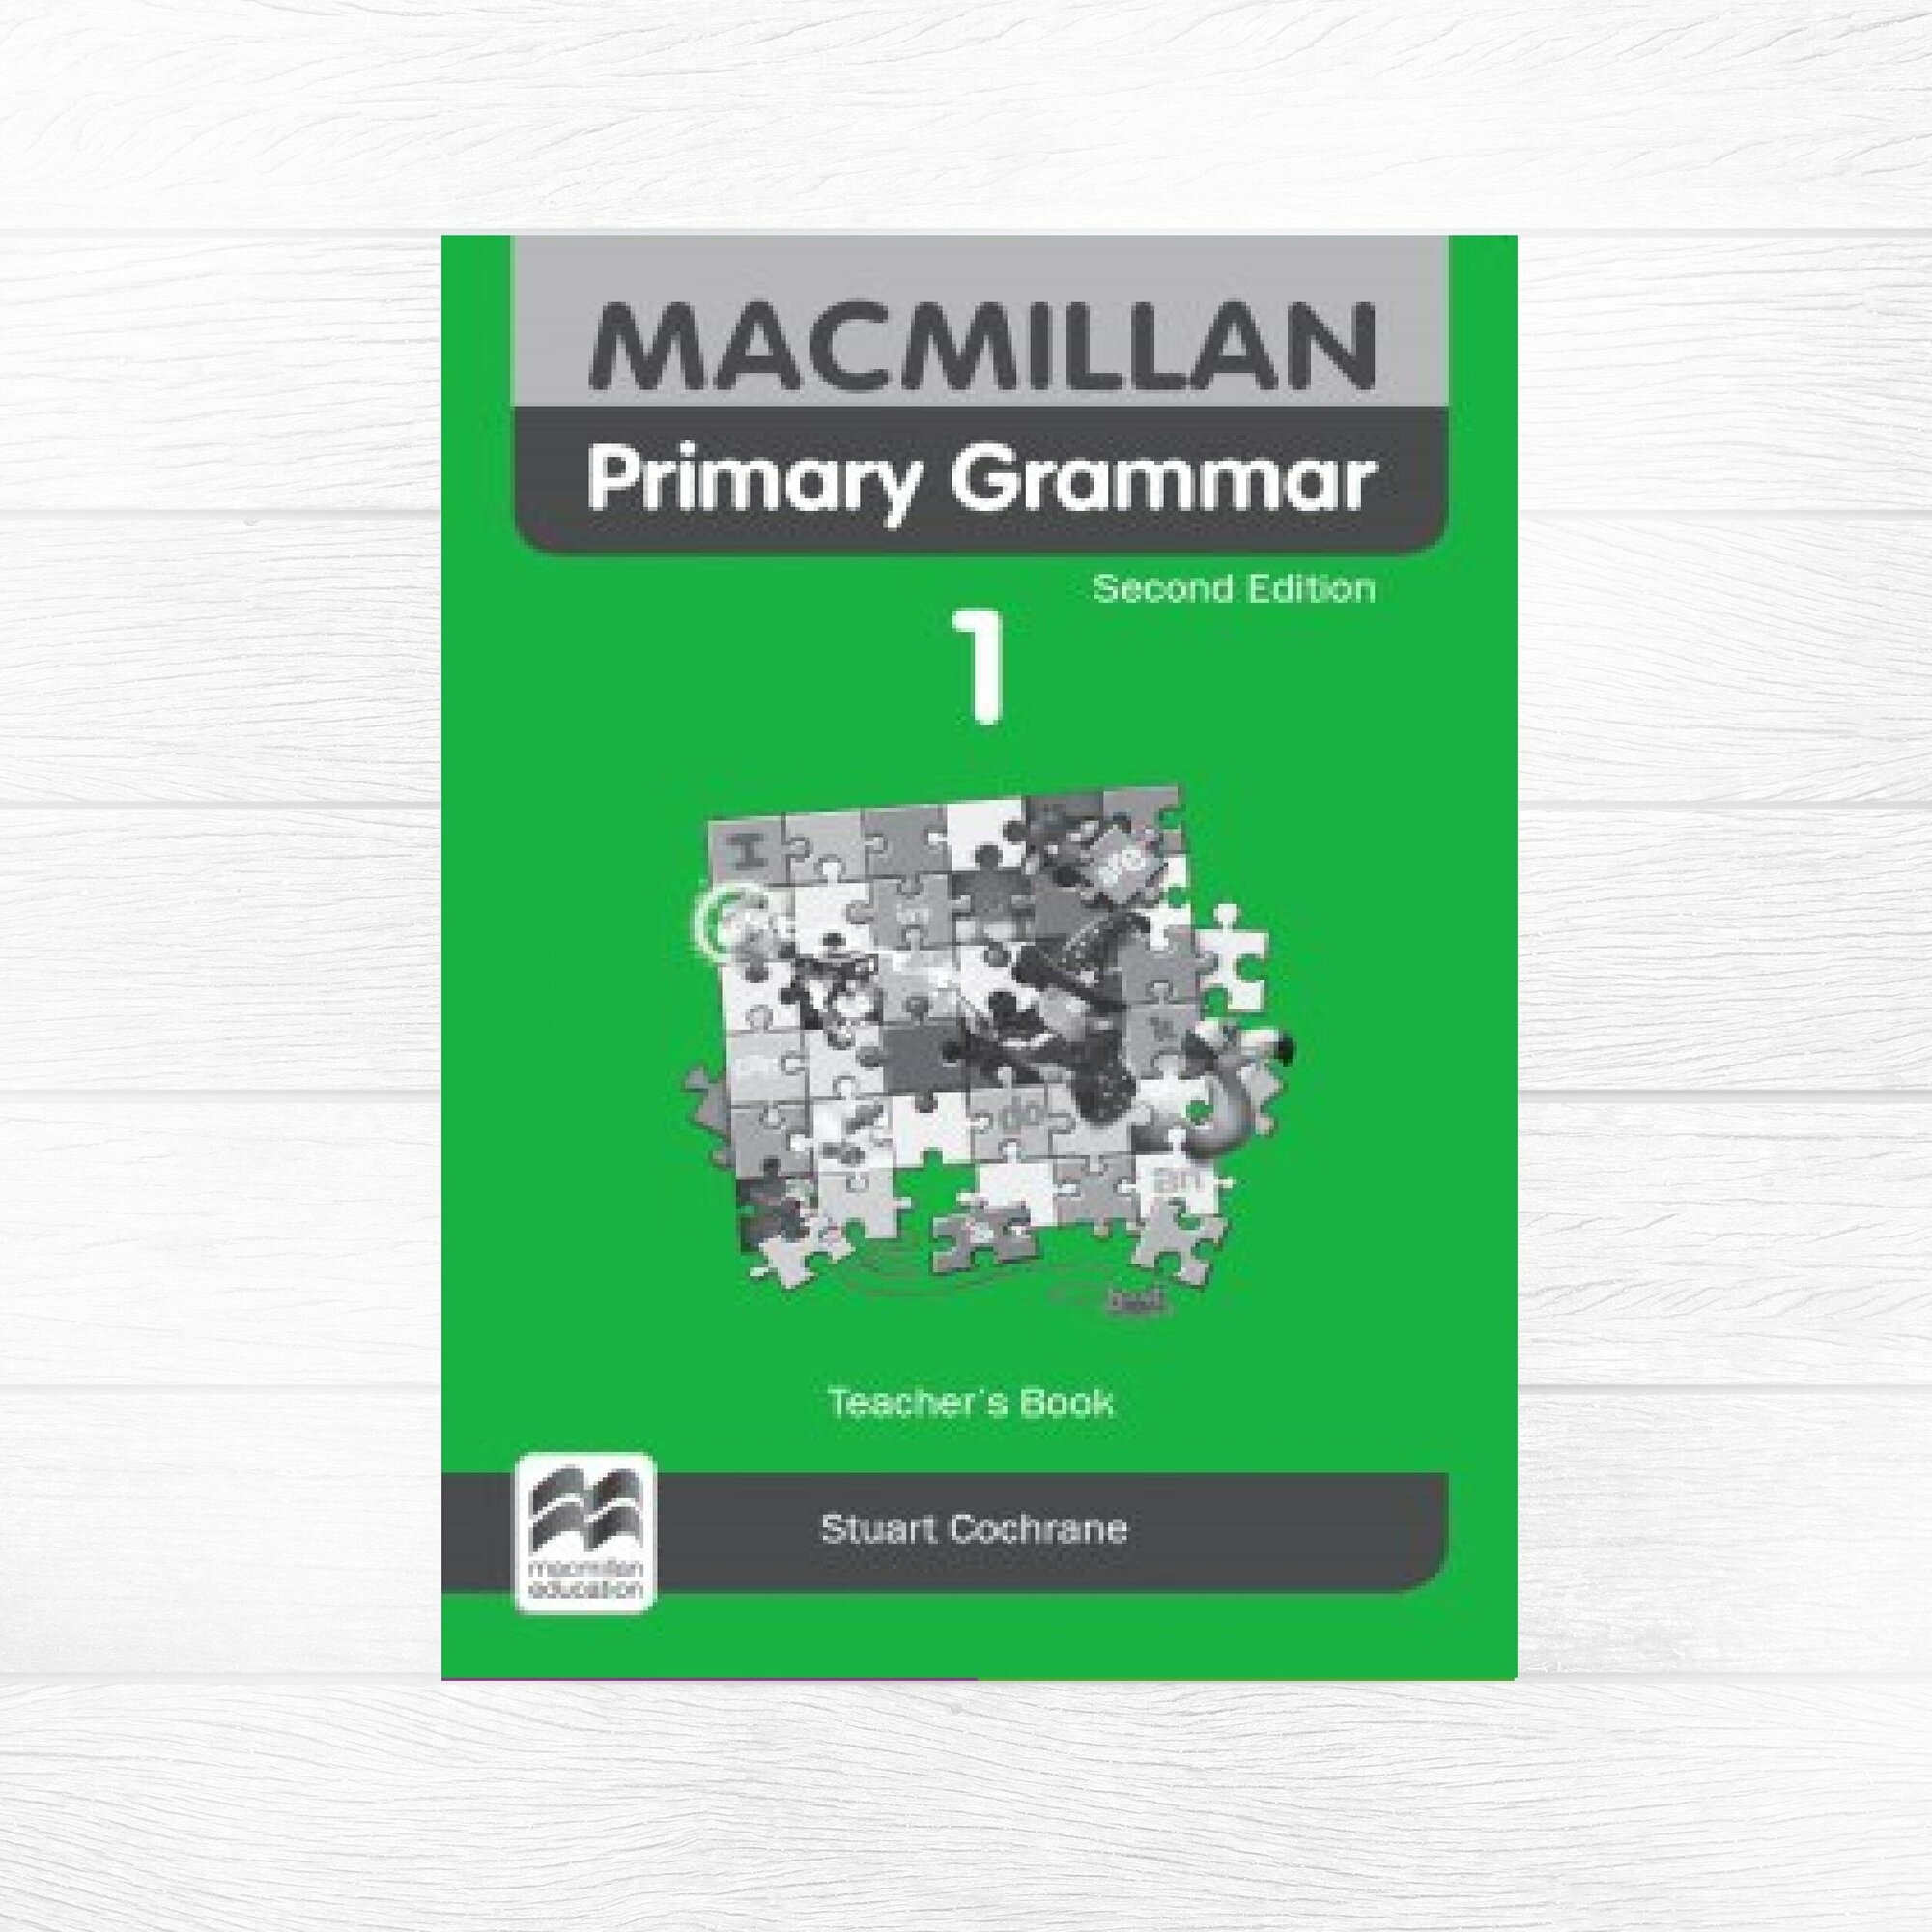 Macmillan Primary Grammar Second Edition 1 Teacher's Book pack + Webcode, книга для учителя по грамматике английского языка для детей